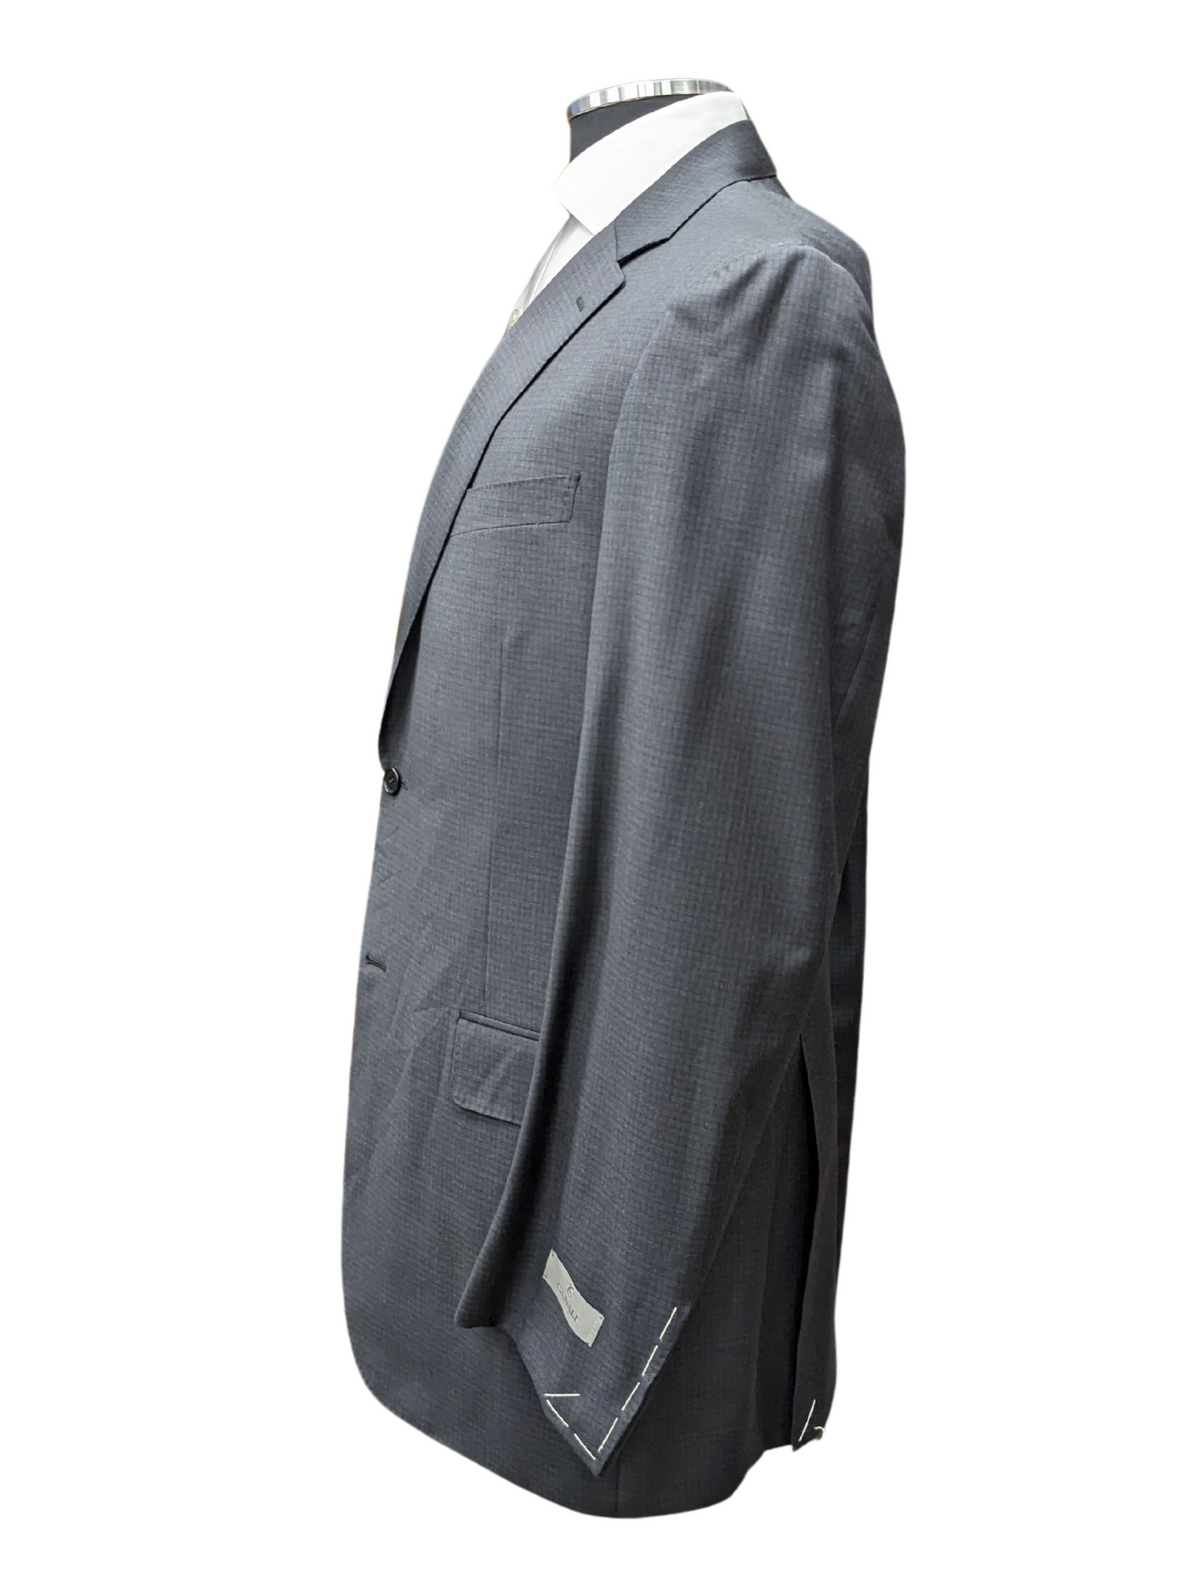 Canali 1934 Mens Gray Check 44L Drop 7 100% Wool 2 Button 2 Piece Suit